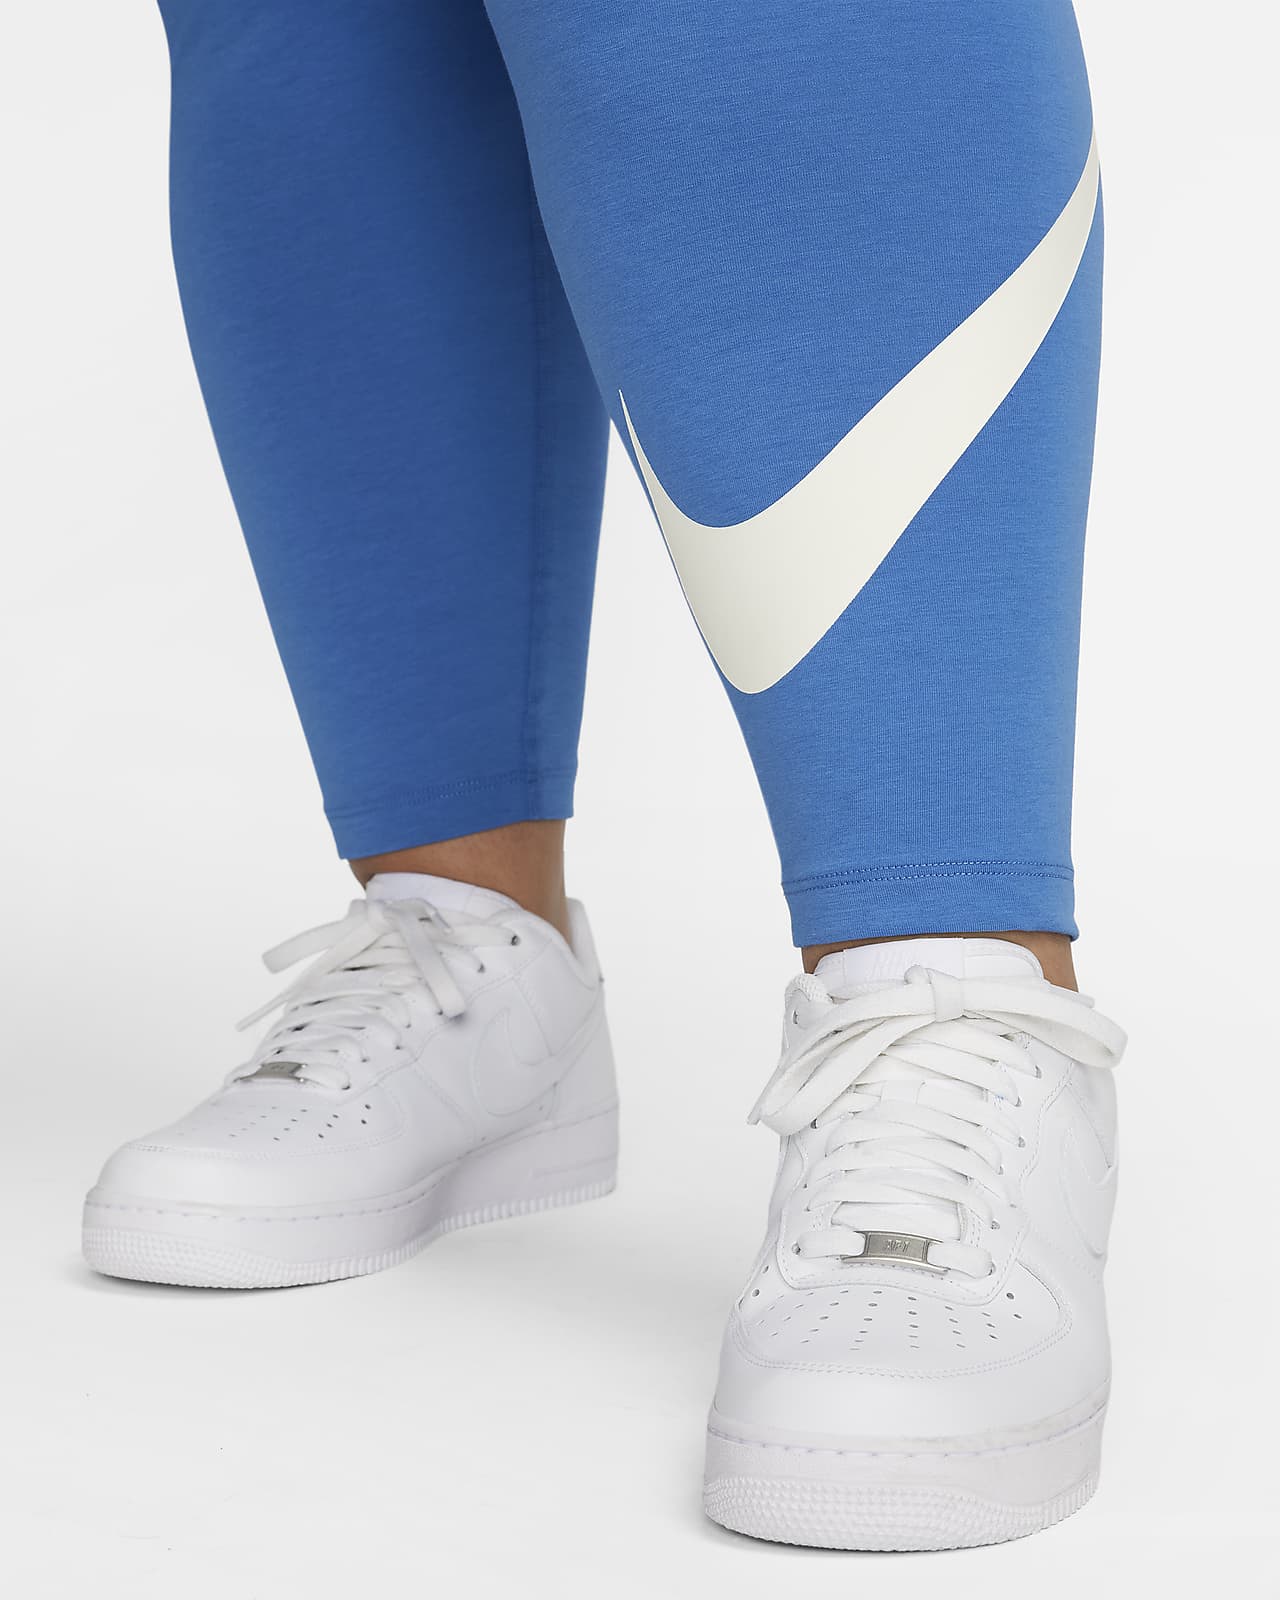 Nike Womens Air Max Legging Black/White AR3503-010 Size X